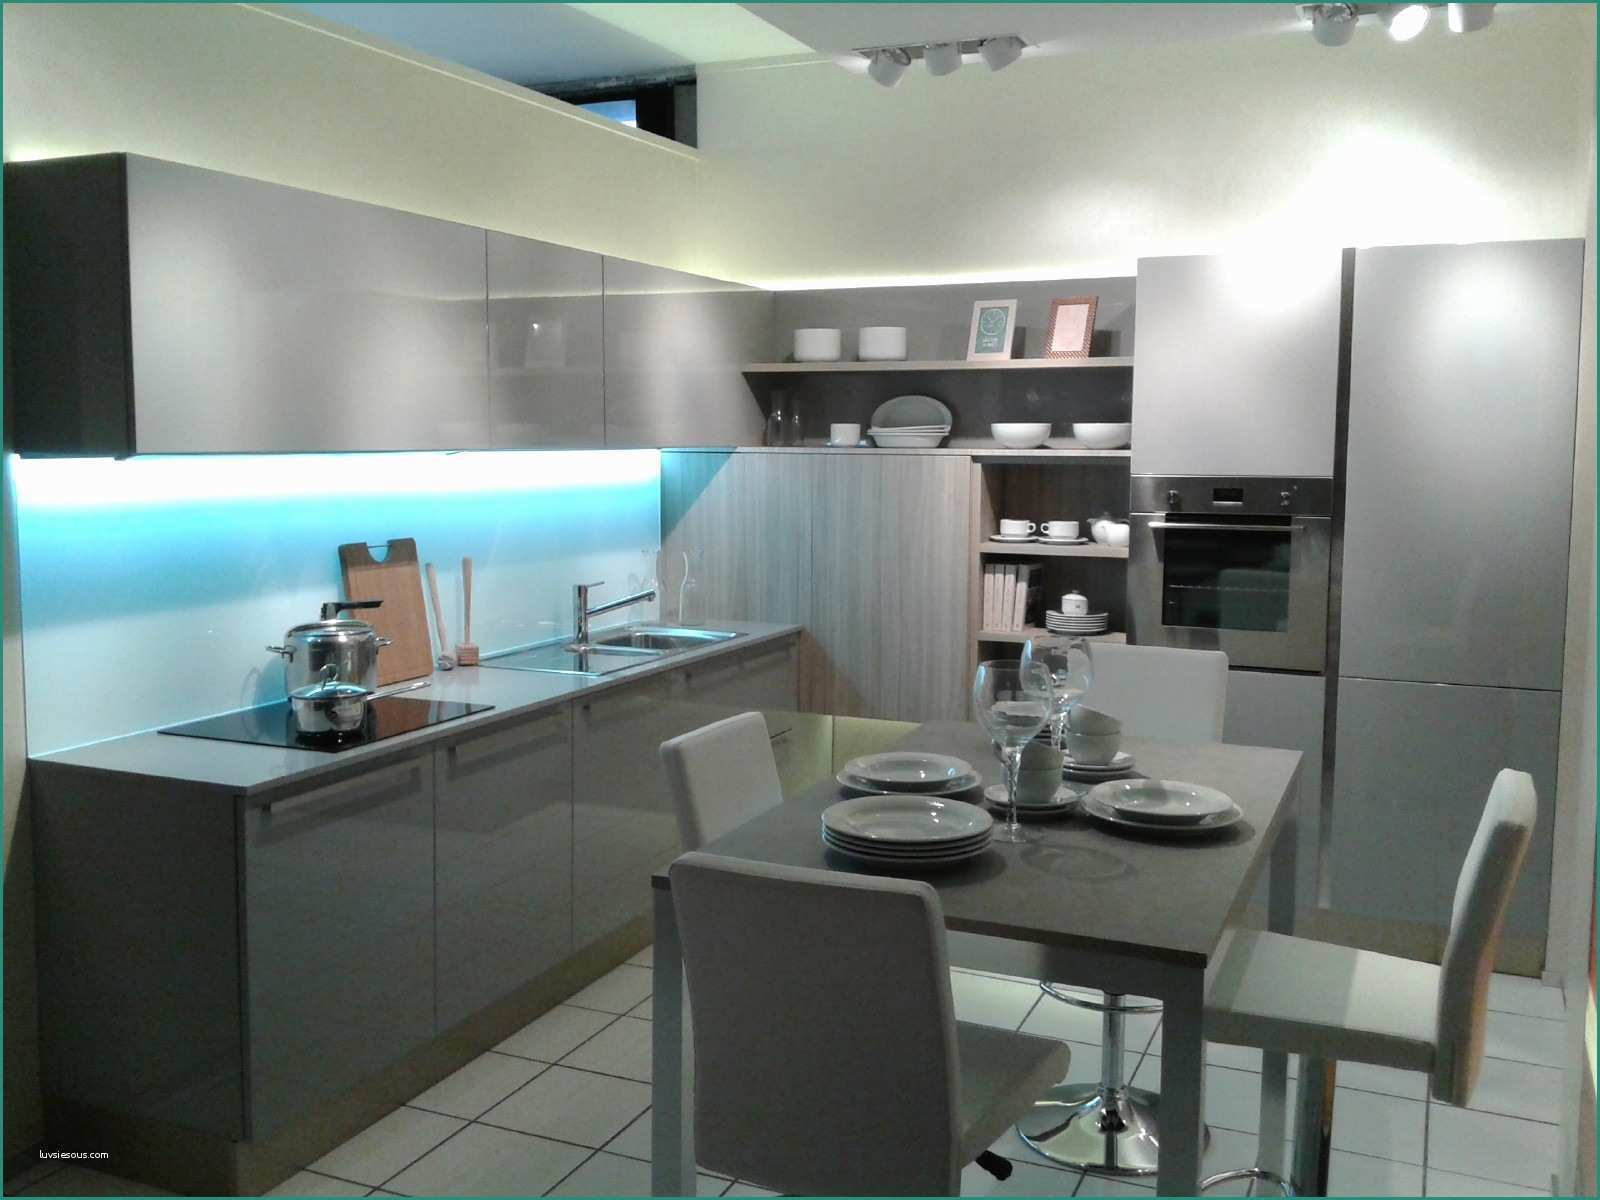 Cucine Moderne Prezzi E Offerte E Veneta Cucine Tavoli Eccezionale Cucina Ikea Catalogo Cucina